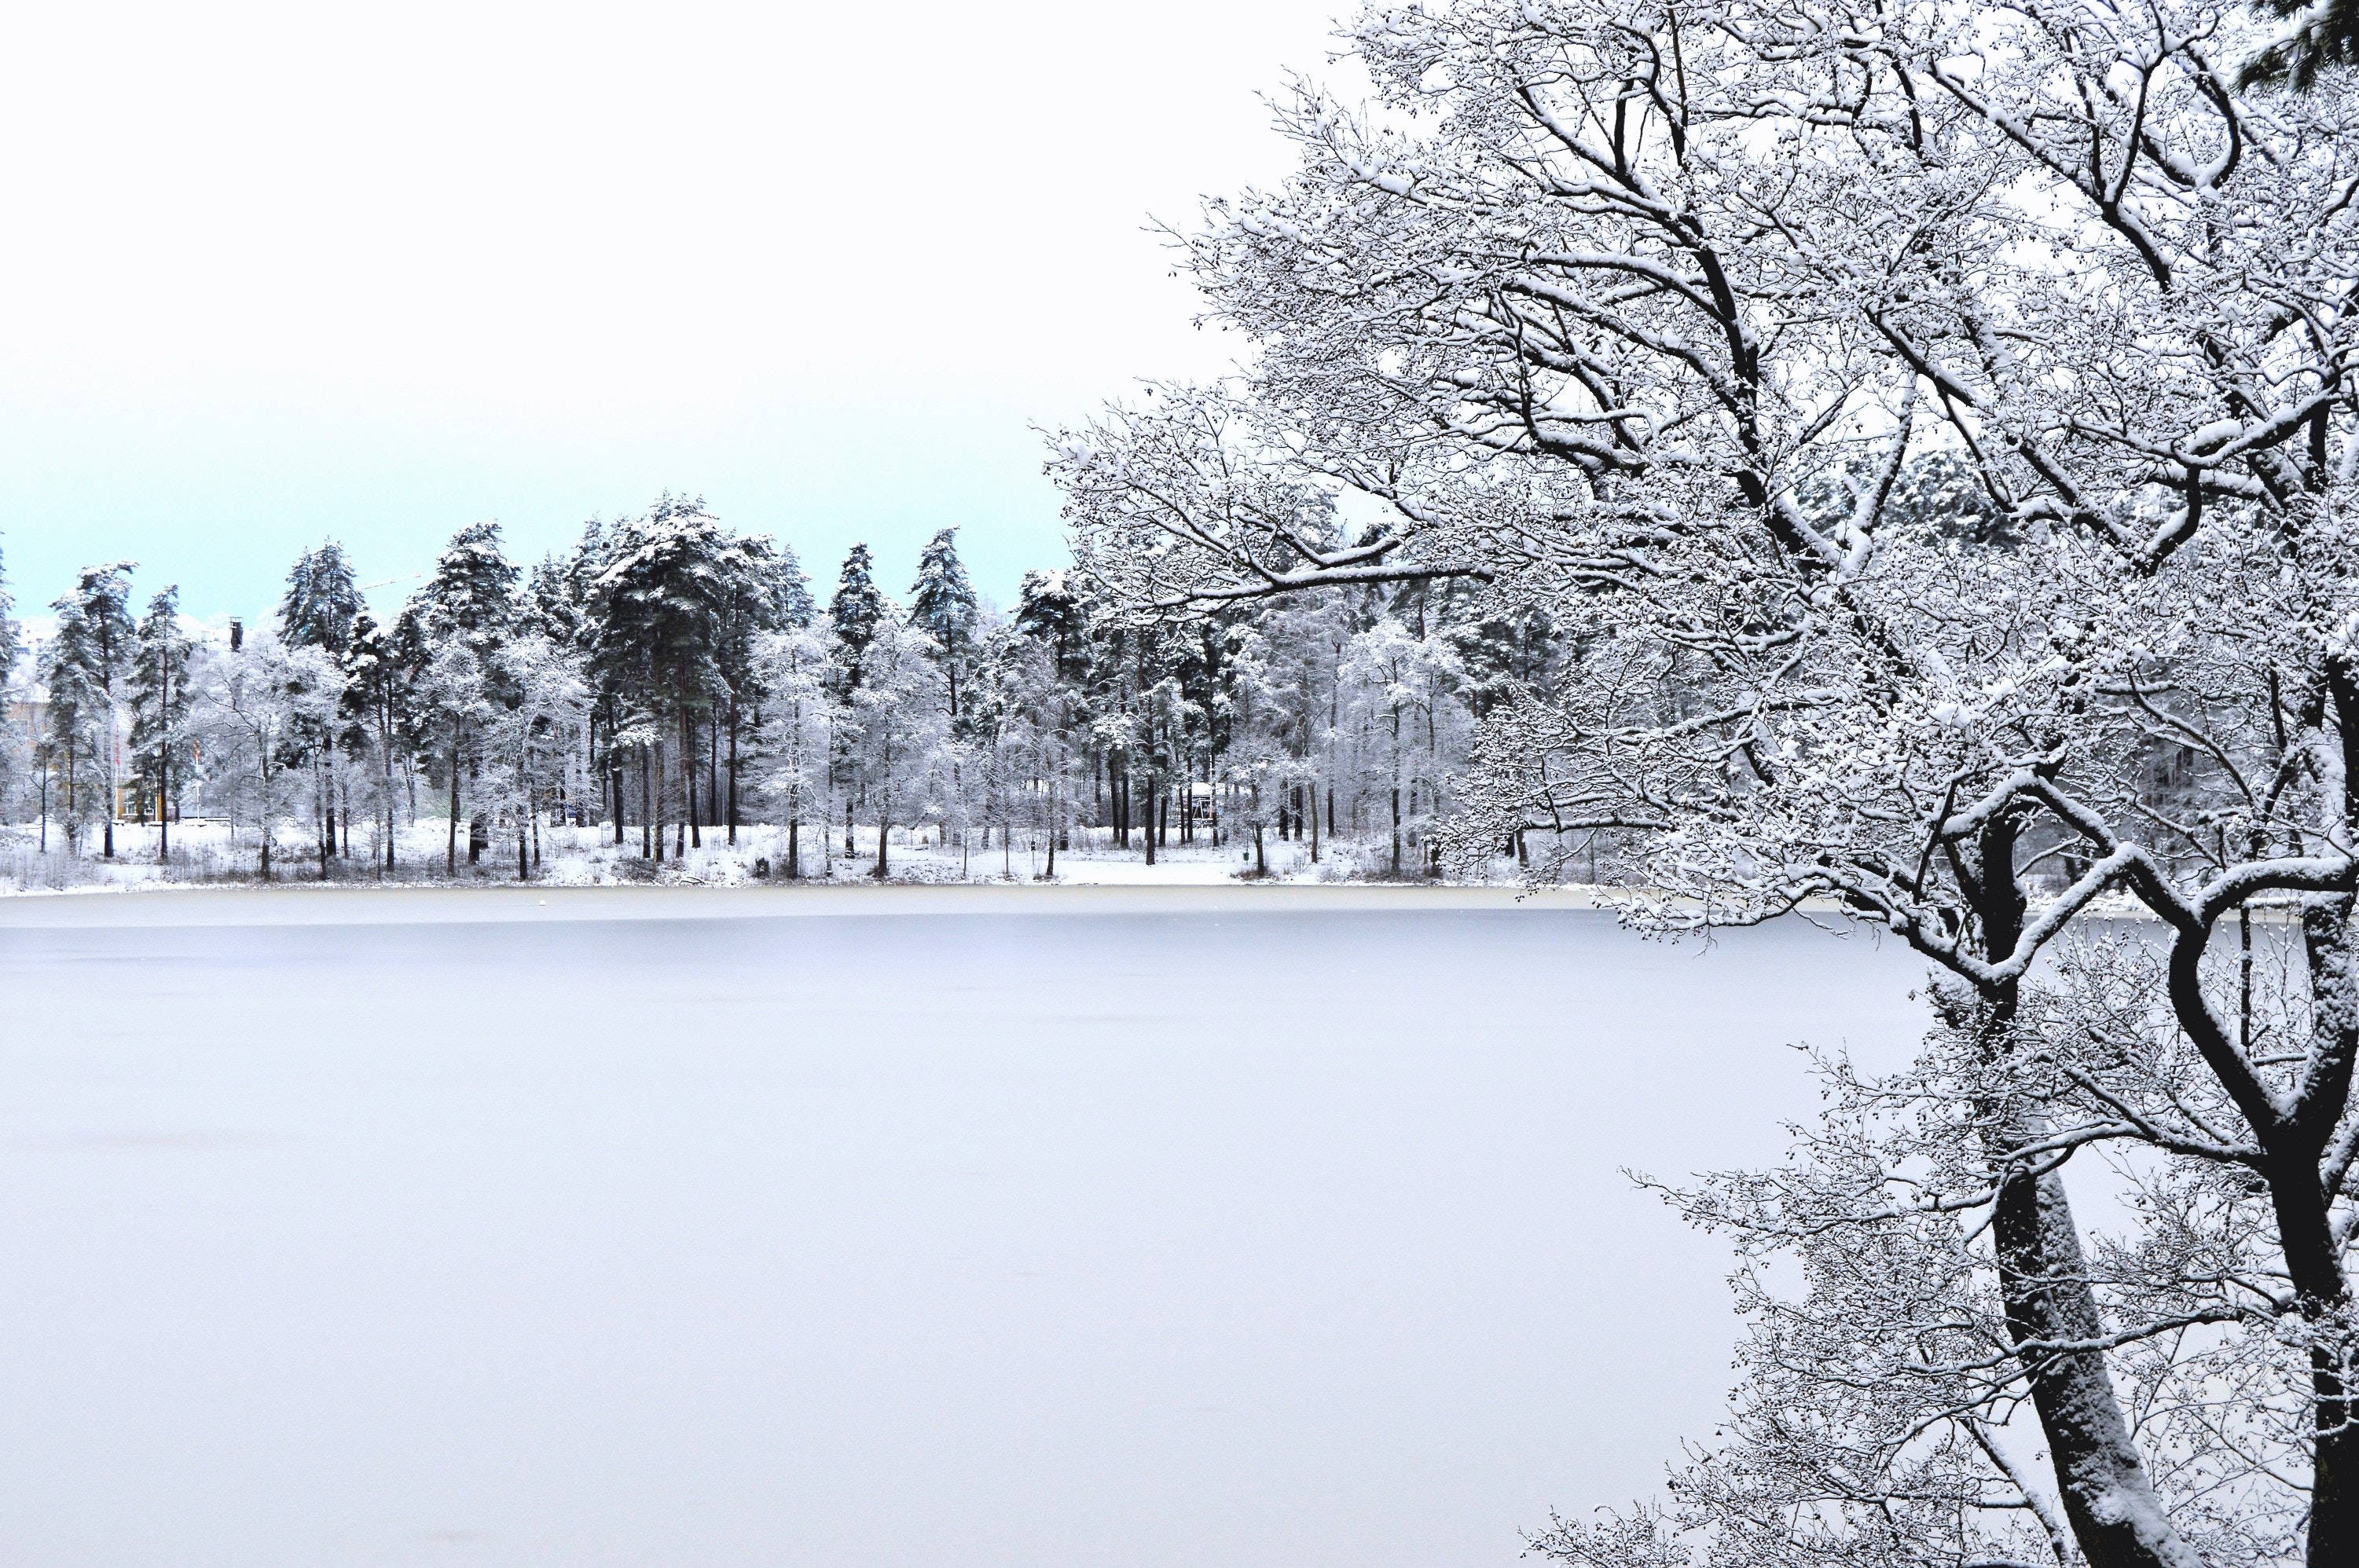 Frozen Lake Winter Scenery Background